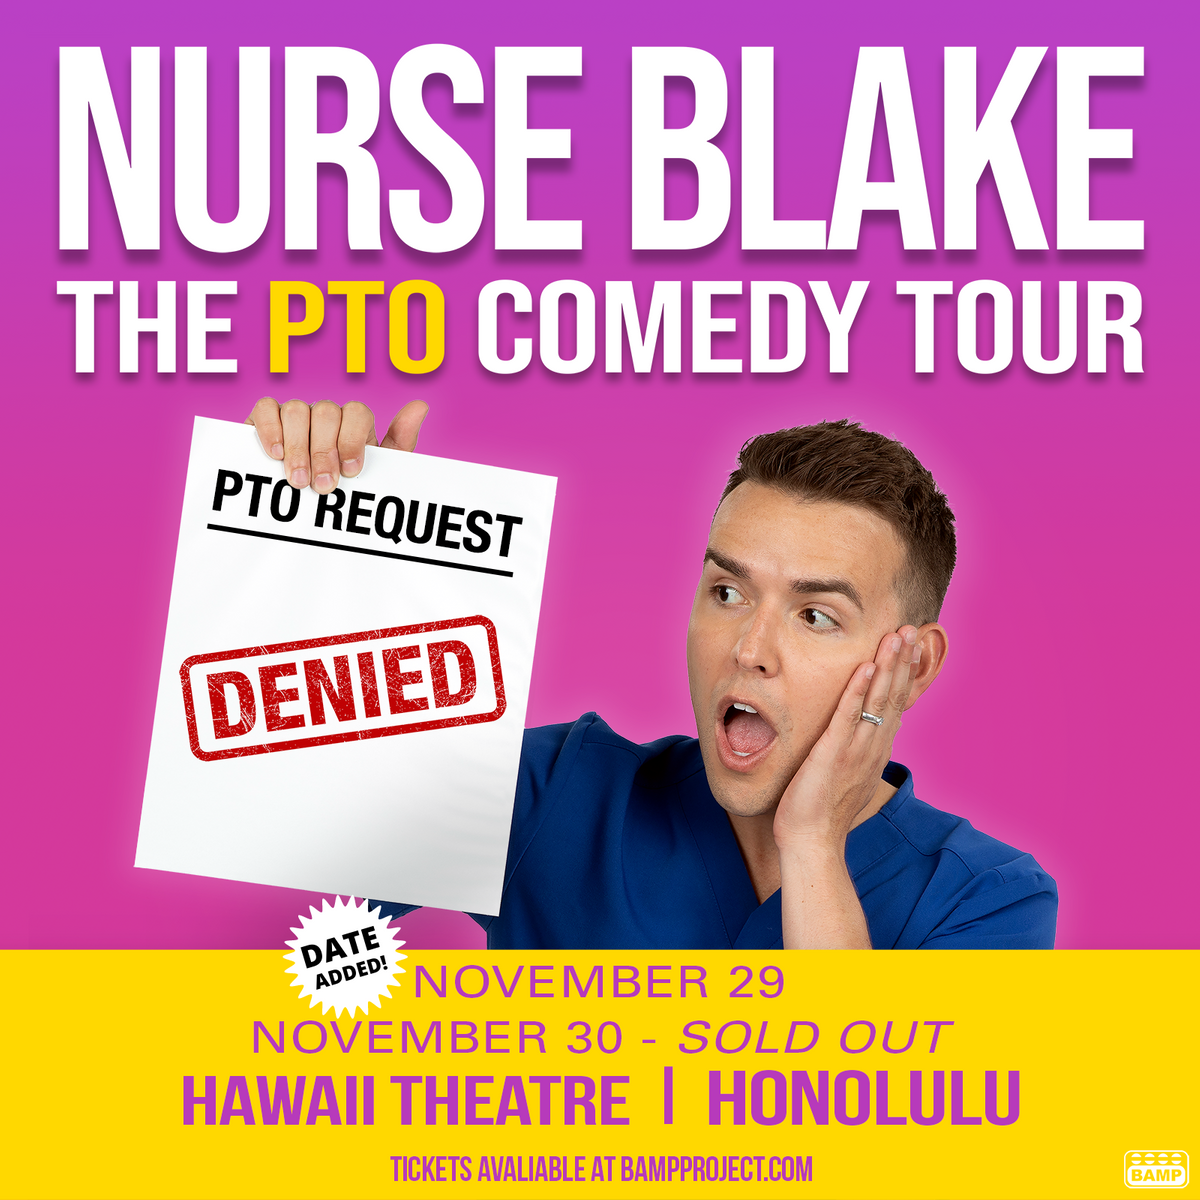 NurseBlake_PTO-ComedyTour_Square_HNL_DATEADDED.png